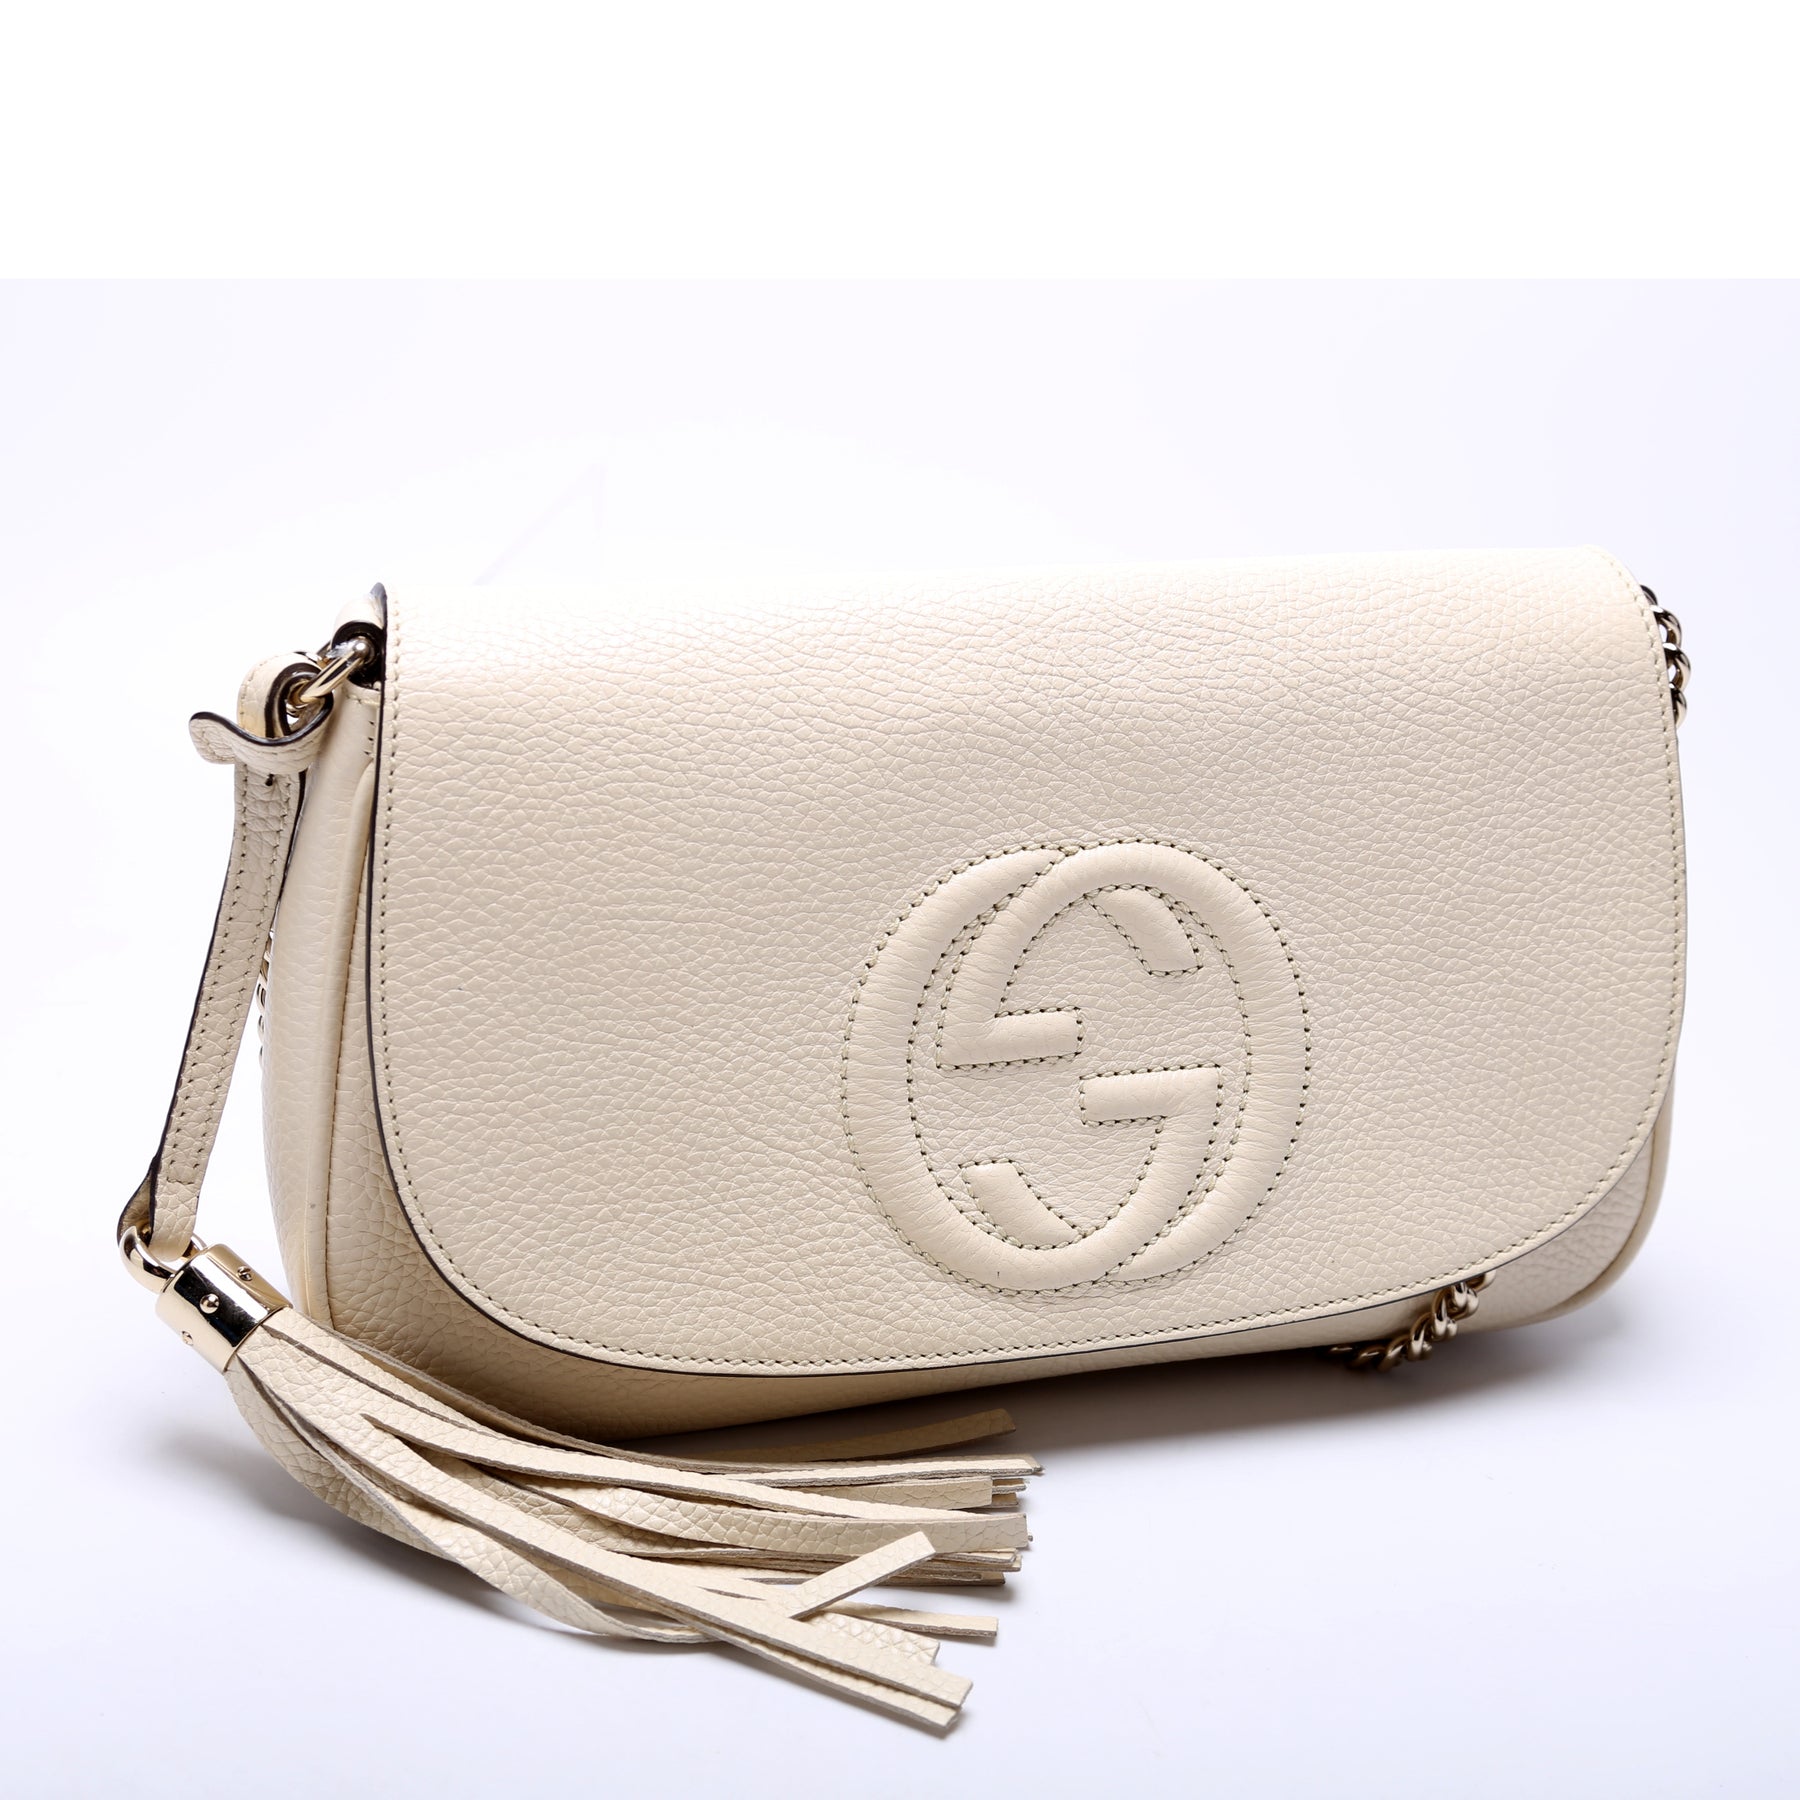 Gucci Beige Leather Small Soho Women's Crossbody Bag 536224